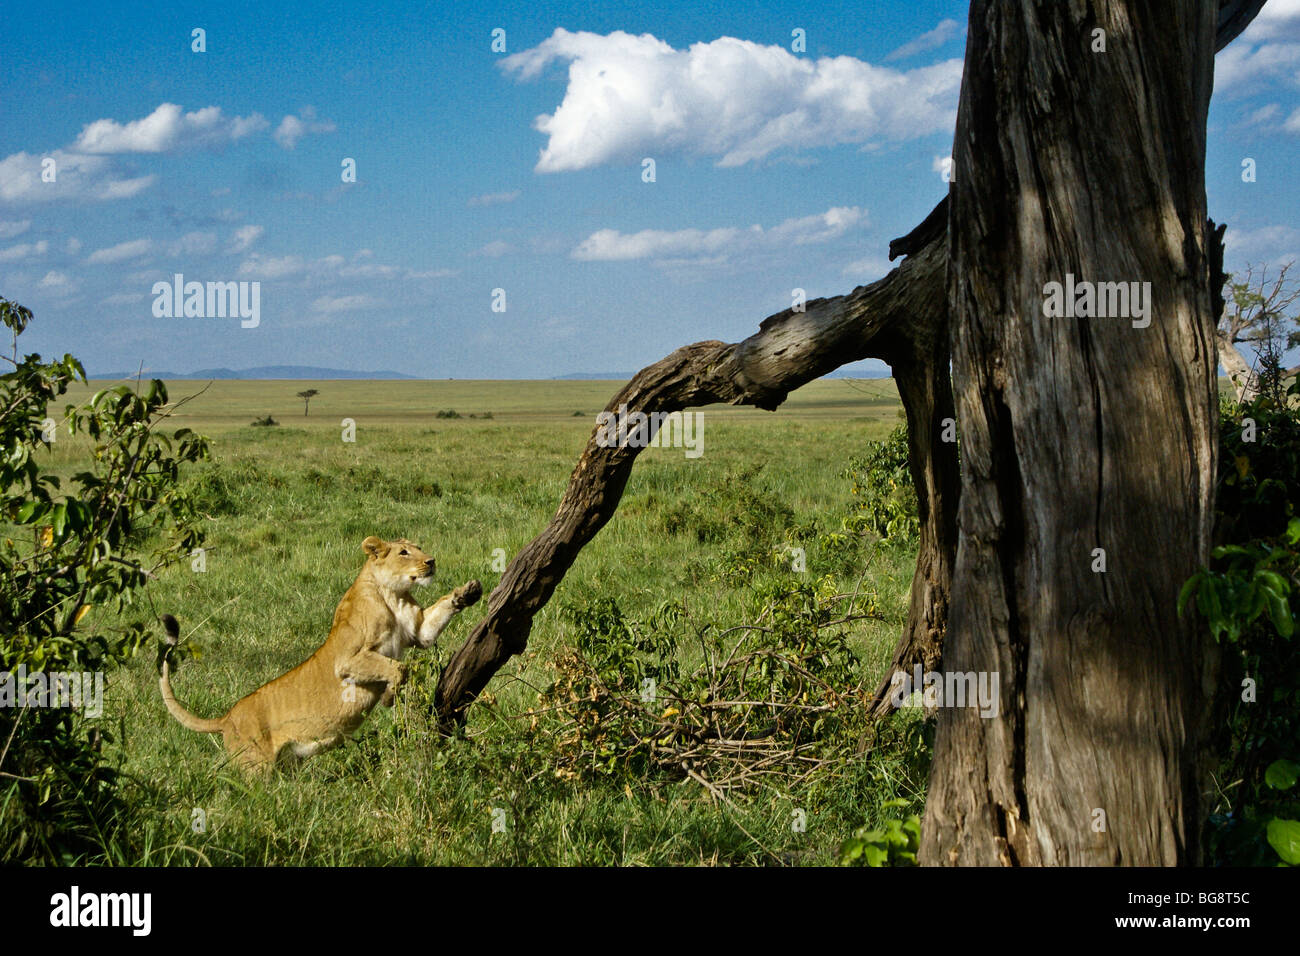 Afrikanische Löwin Sprung in Baum, Masai Mara, Kenia Stockfoto